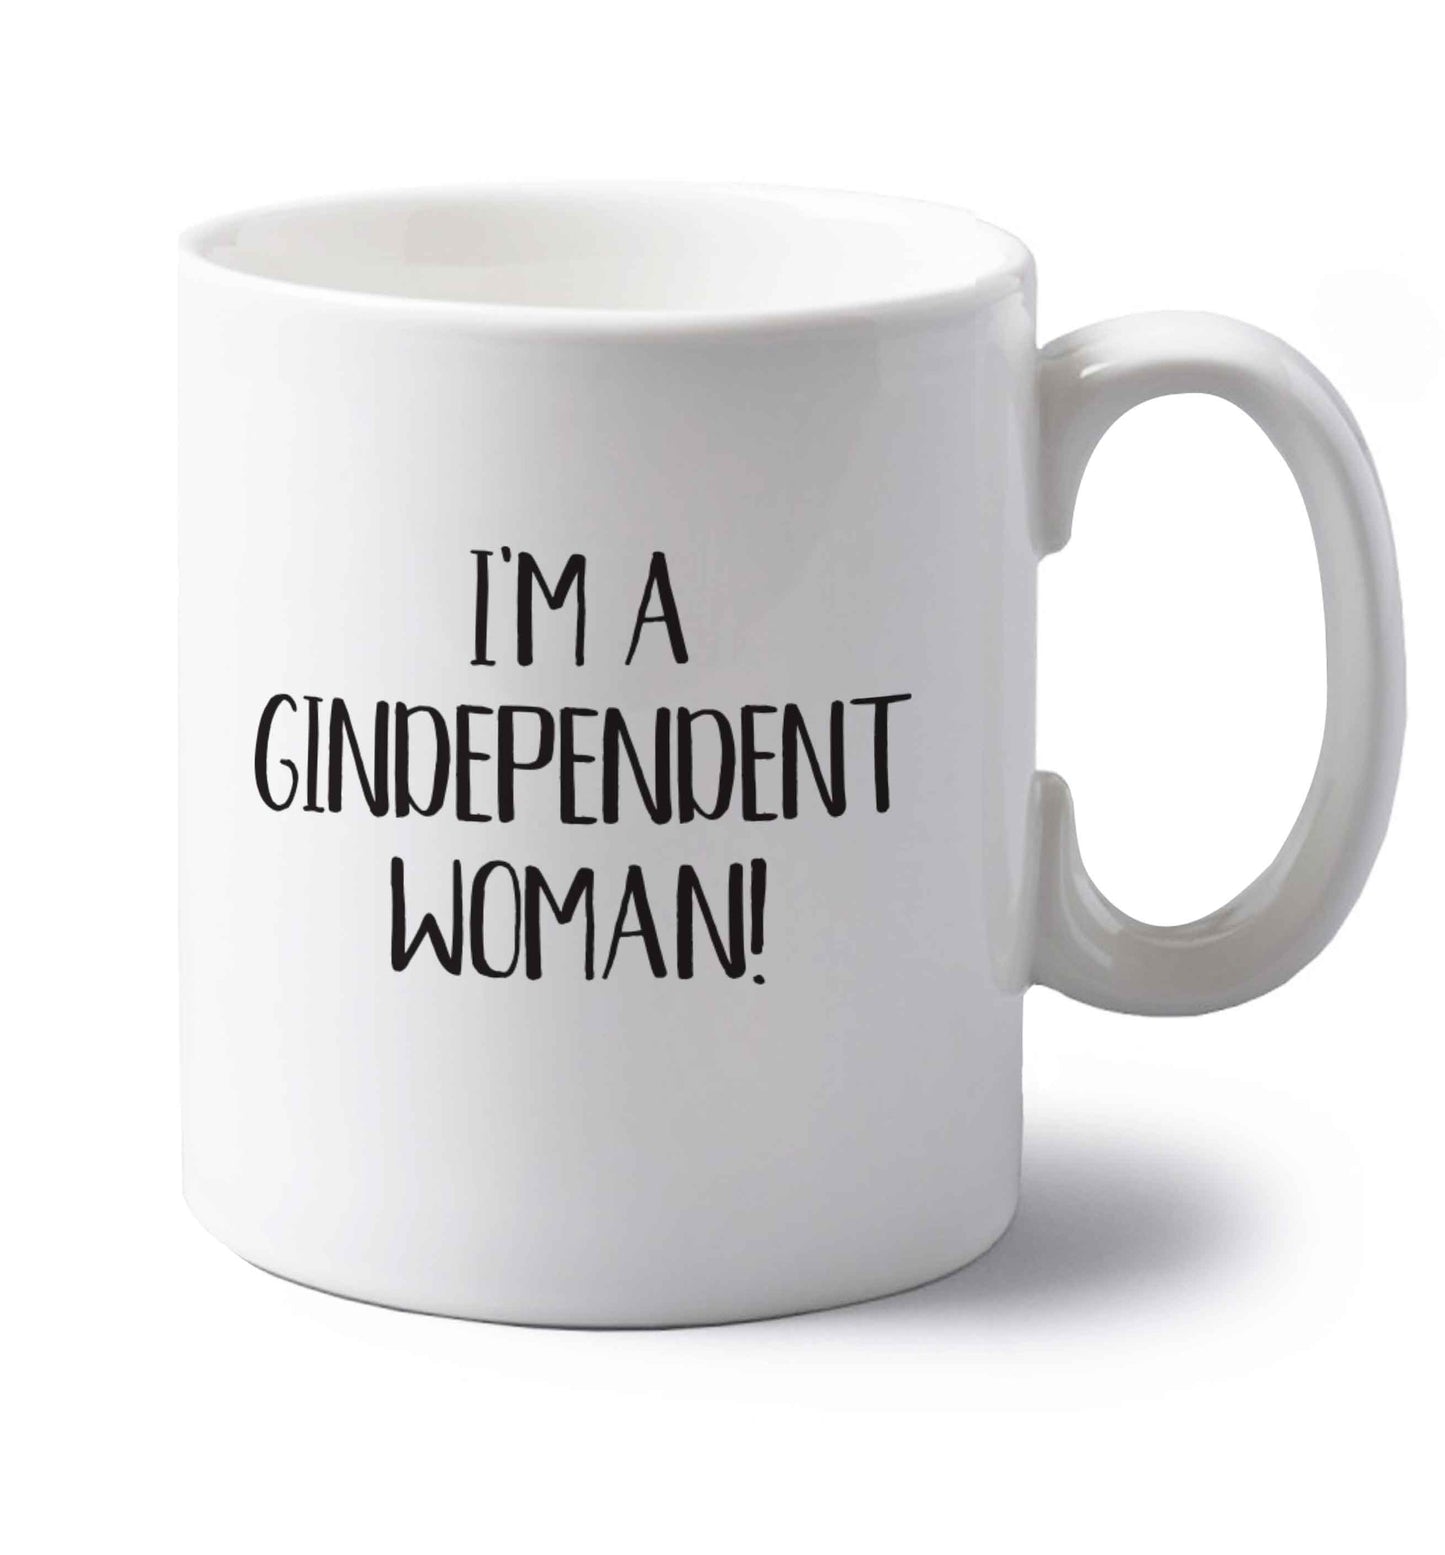 I'm a gindependent woman left handed white ceramic mug 